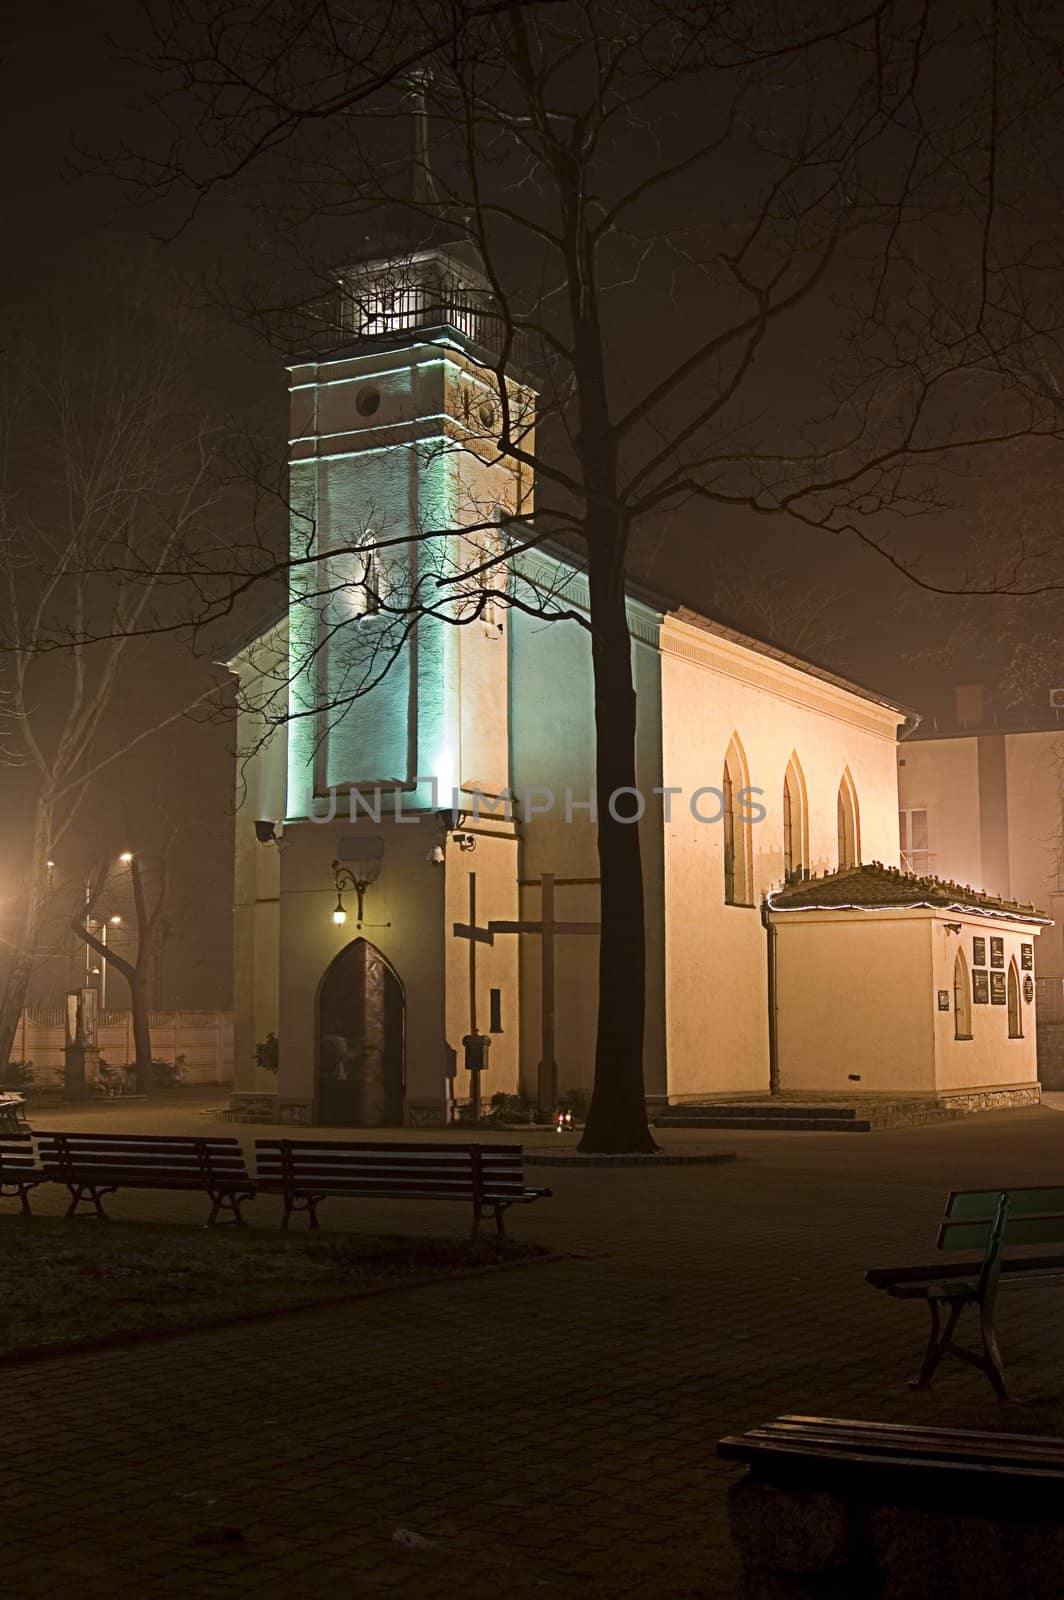 church in Poland by night by Gandalfo